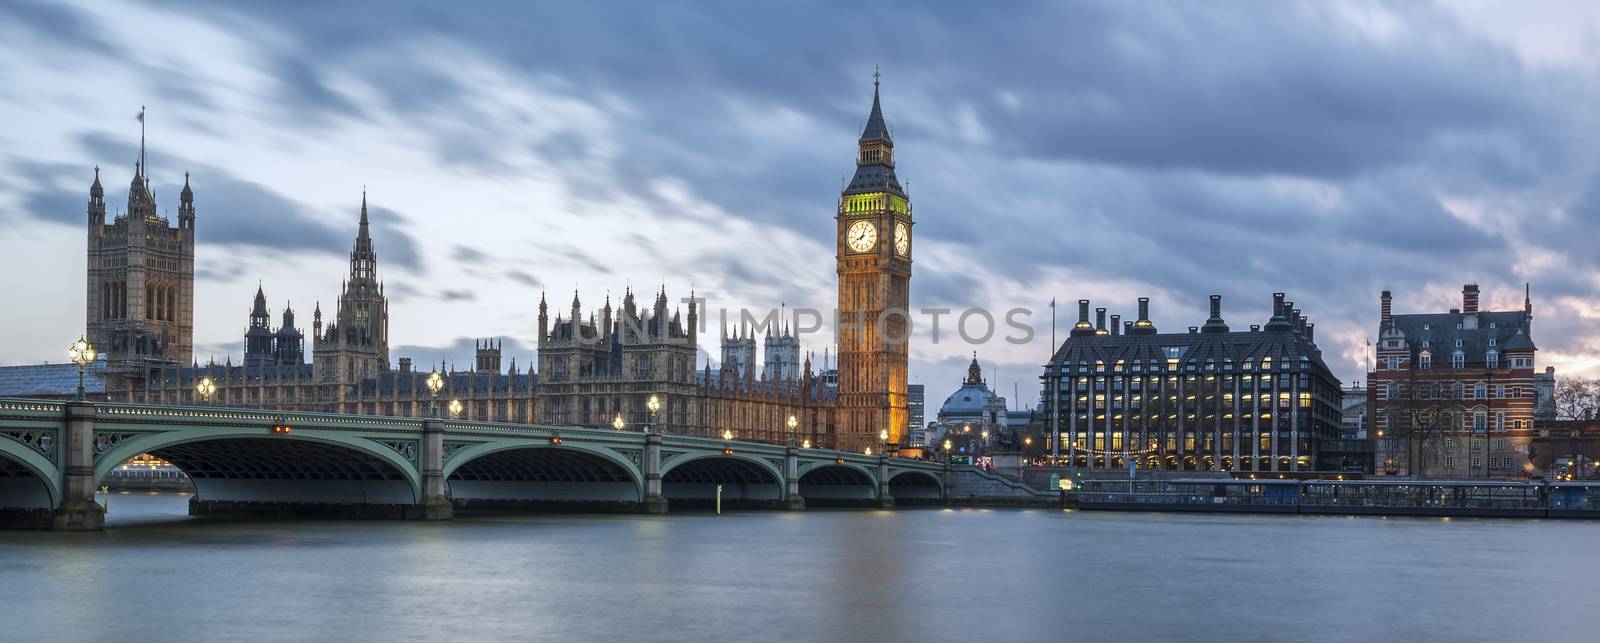 Panoramic view of Big Ben by vwalakte